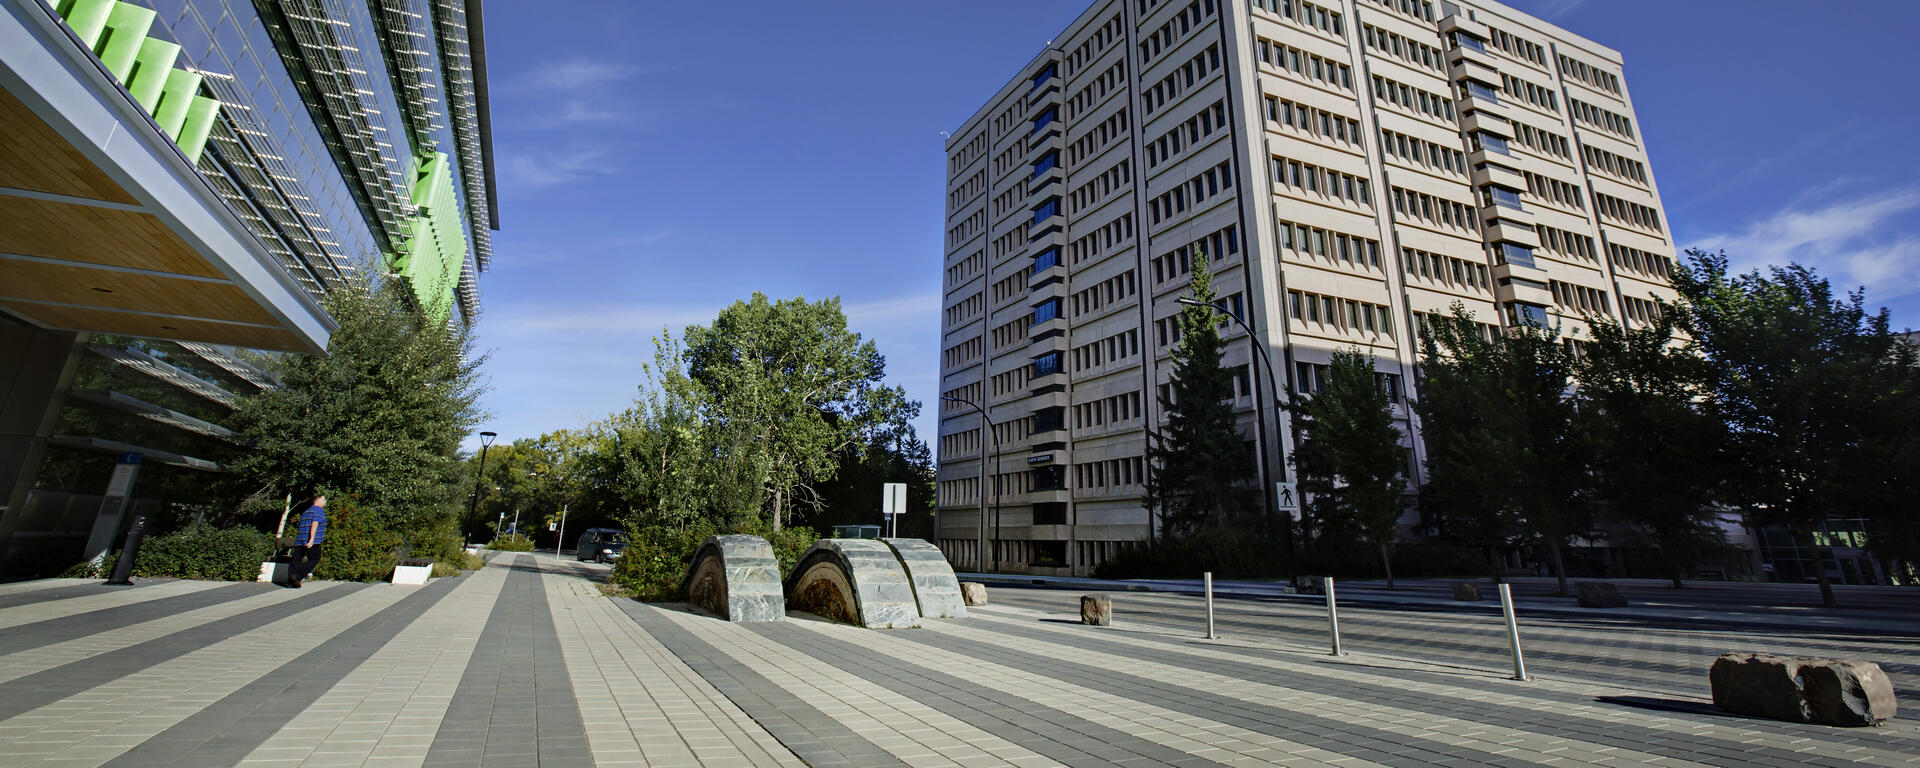 Campus greenspaces 